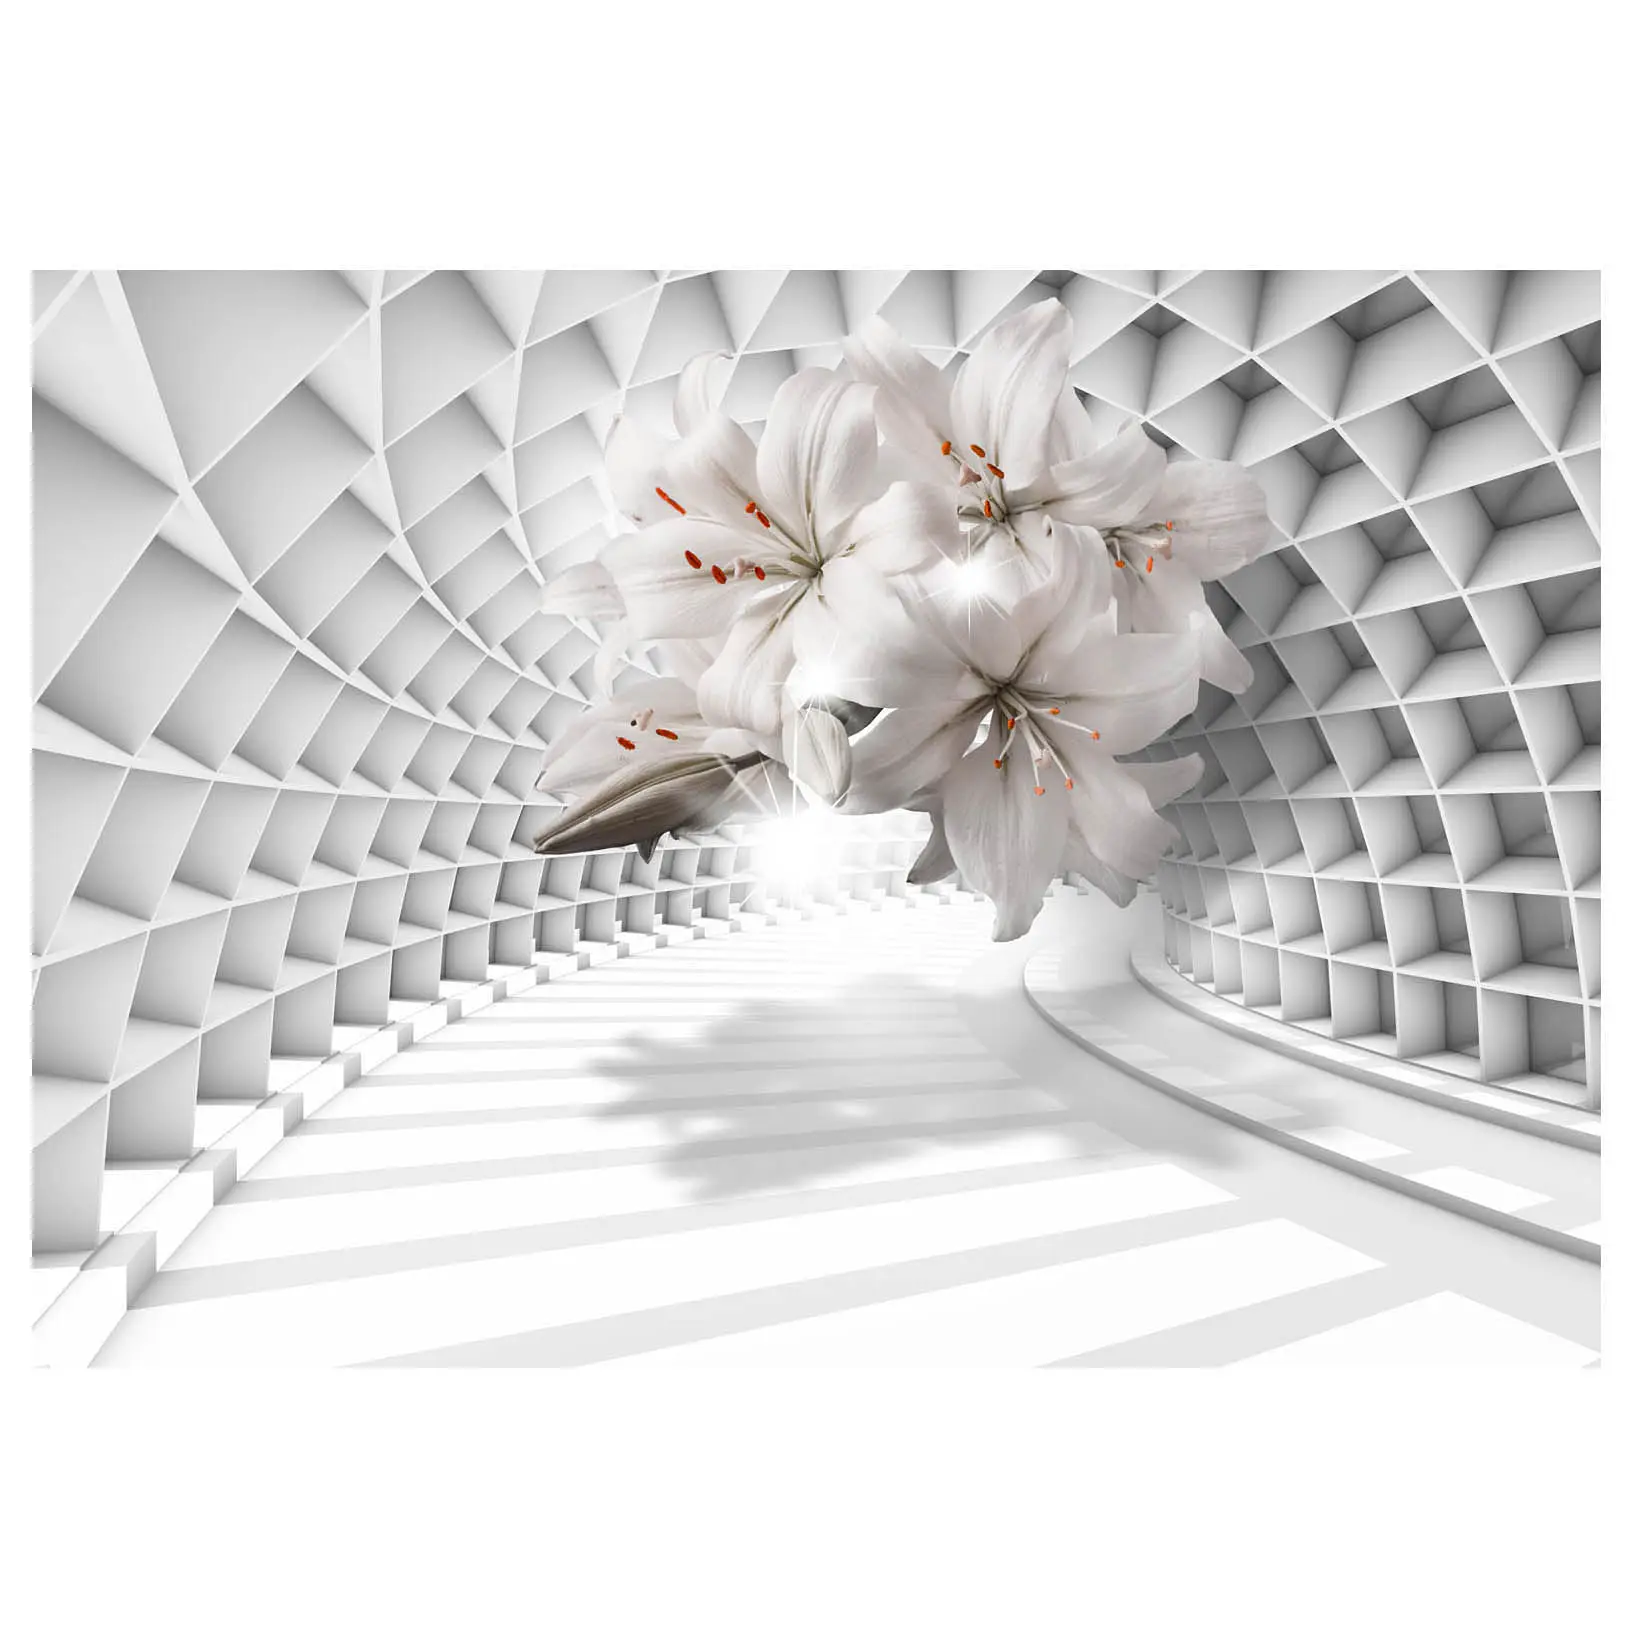 Tunnel in the Fototapete Flowers